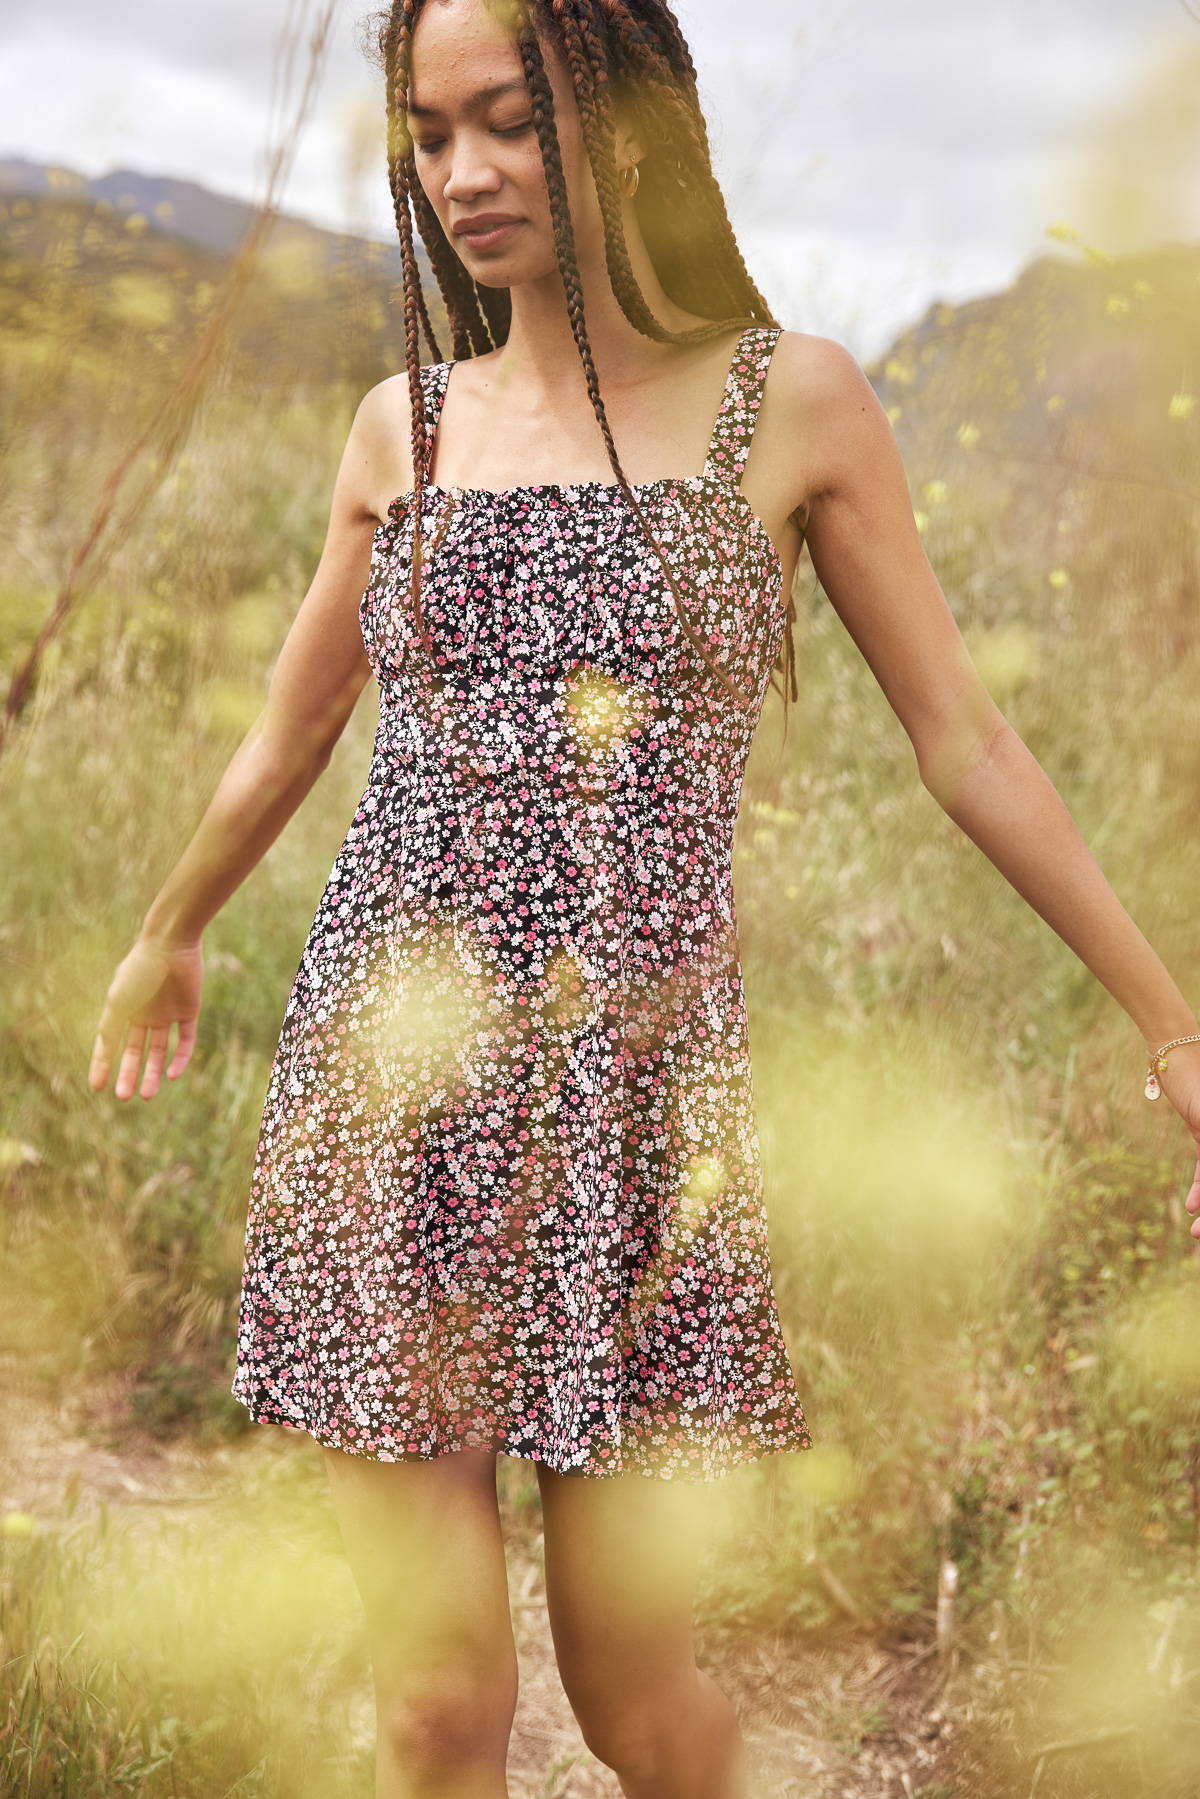 Trixxi sun-kissed summer, girl in ditsy floral mini tank dress.